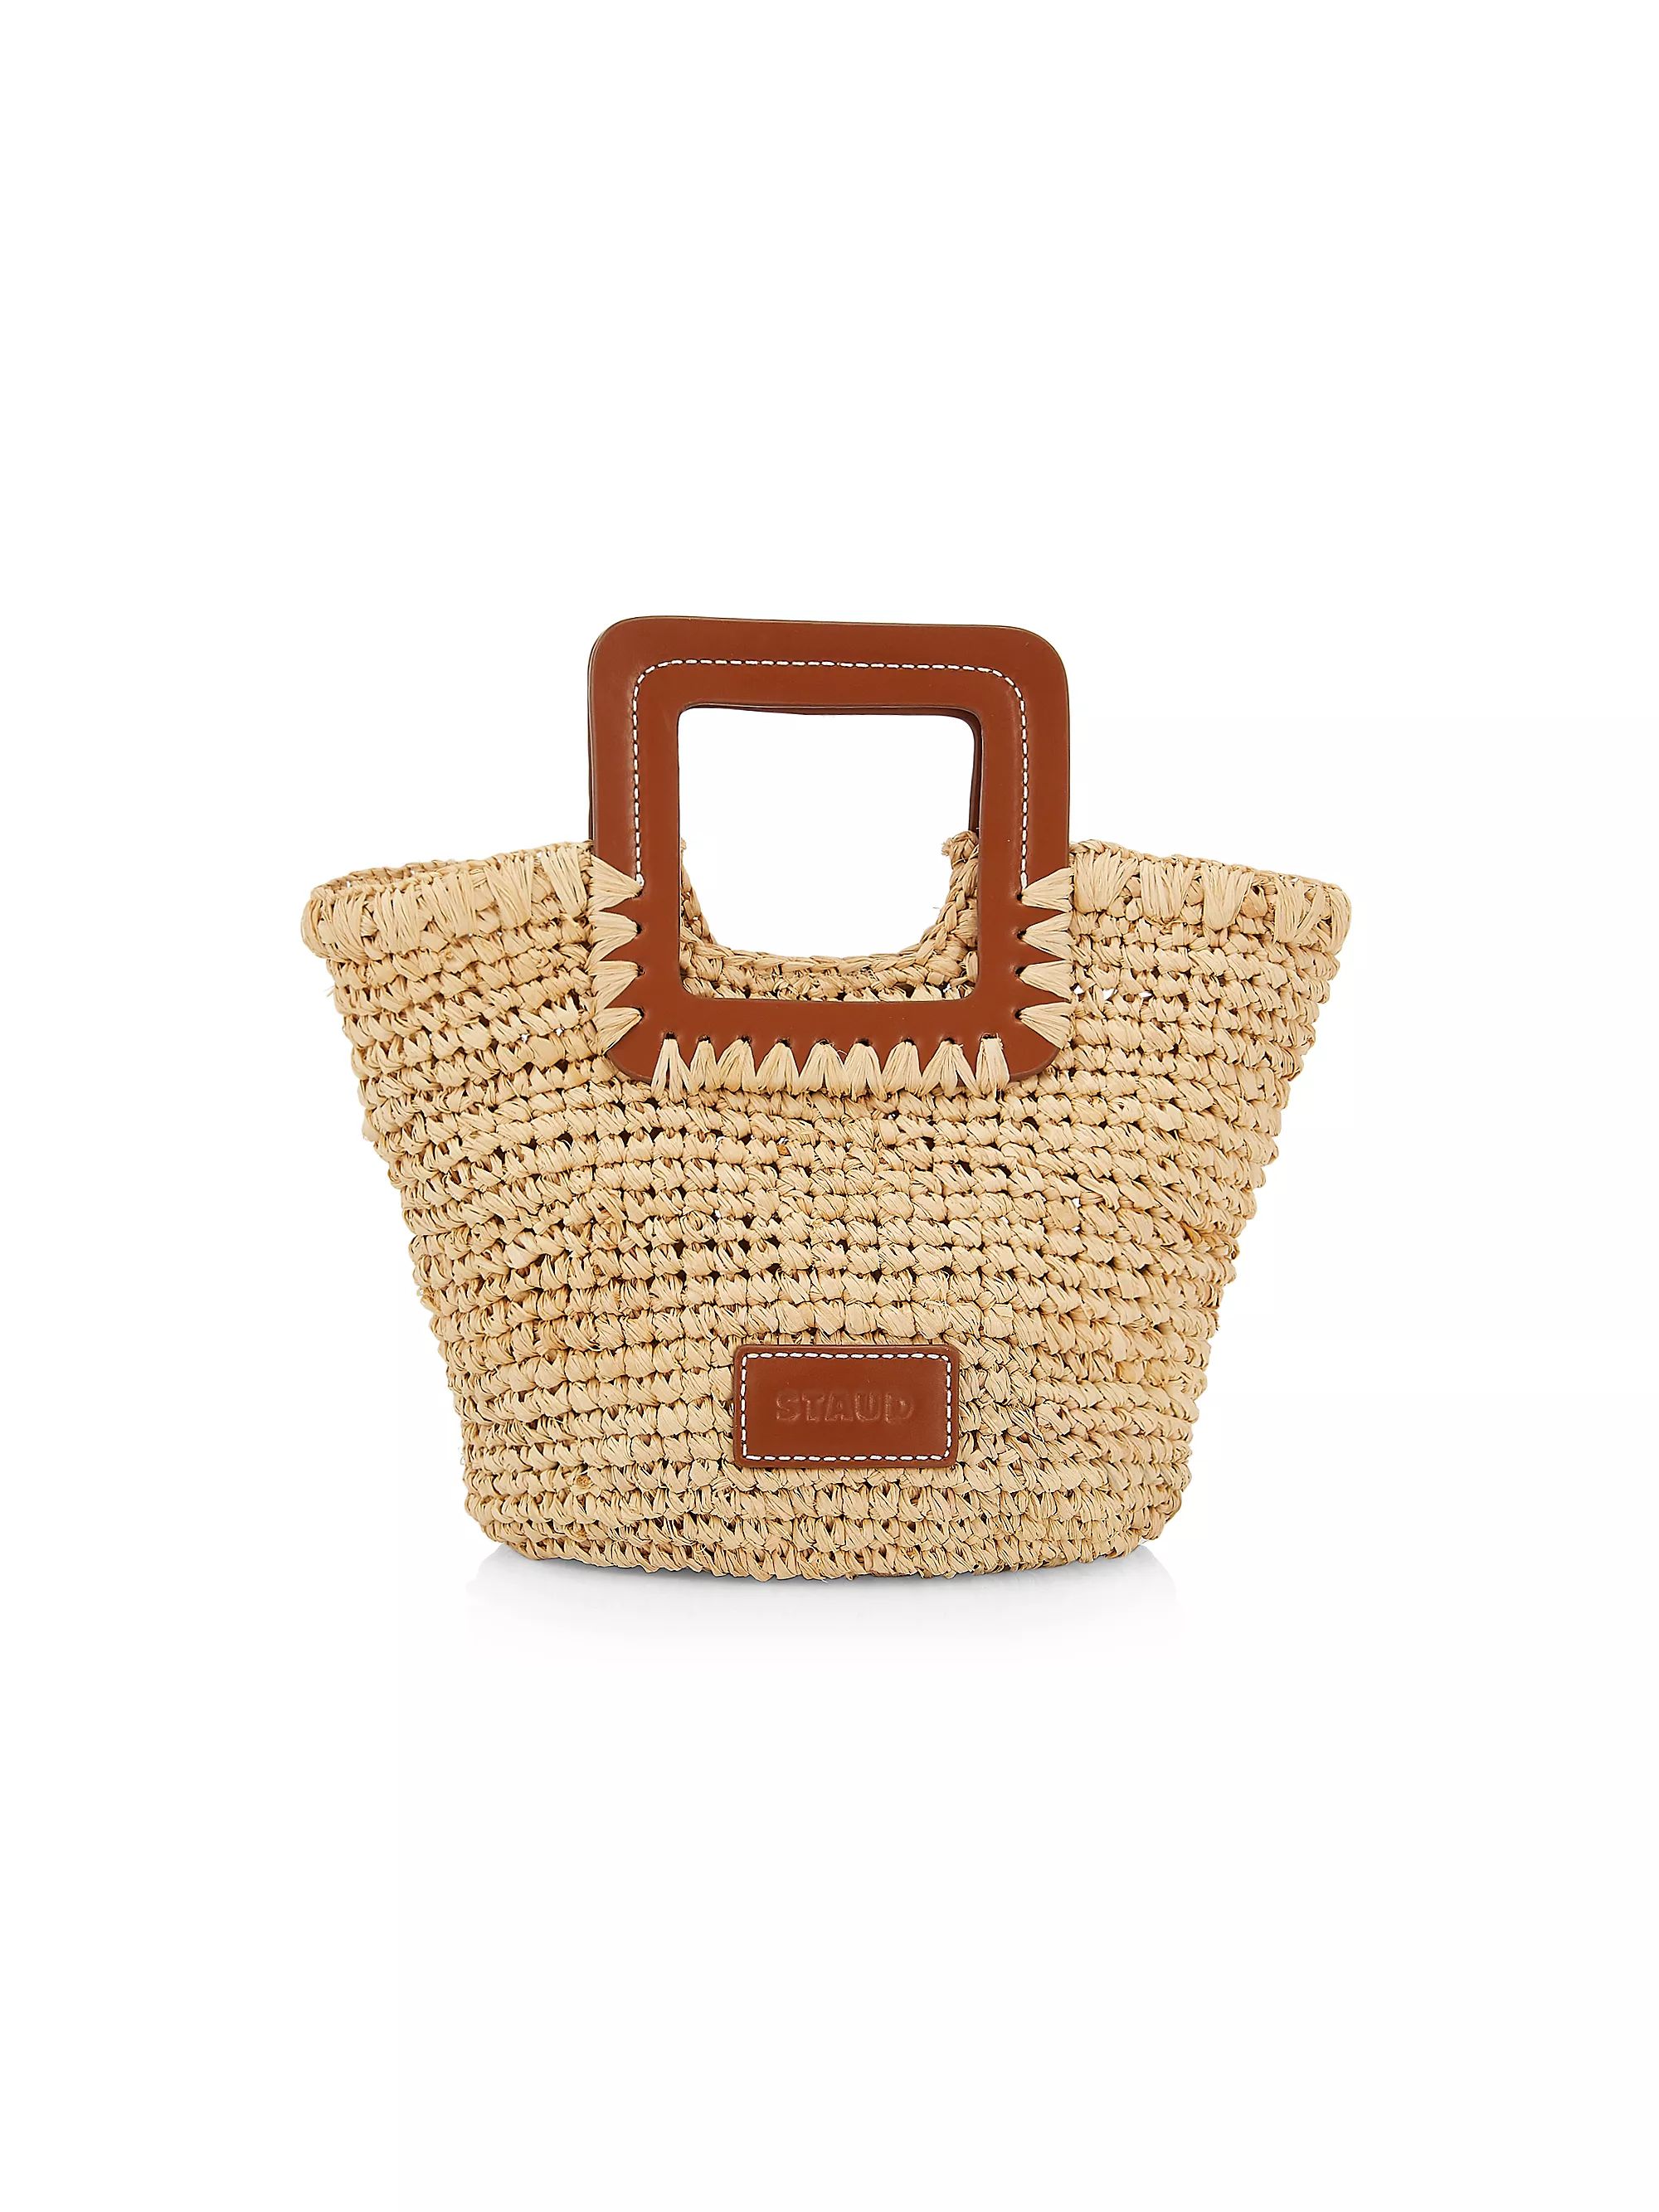 Shop By CategoryBucket BagsStaudSuede Shirley Mini Bucket Bag$250 | Saks Fifth Avenue